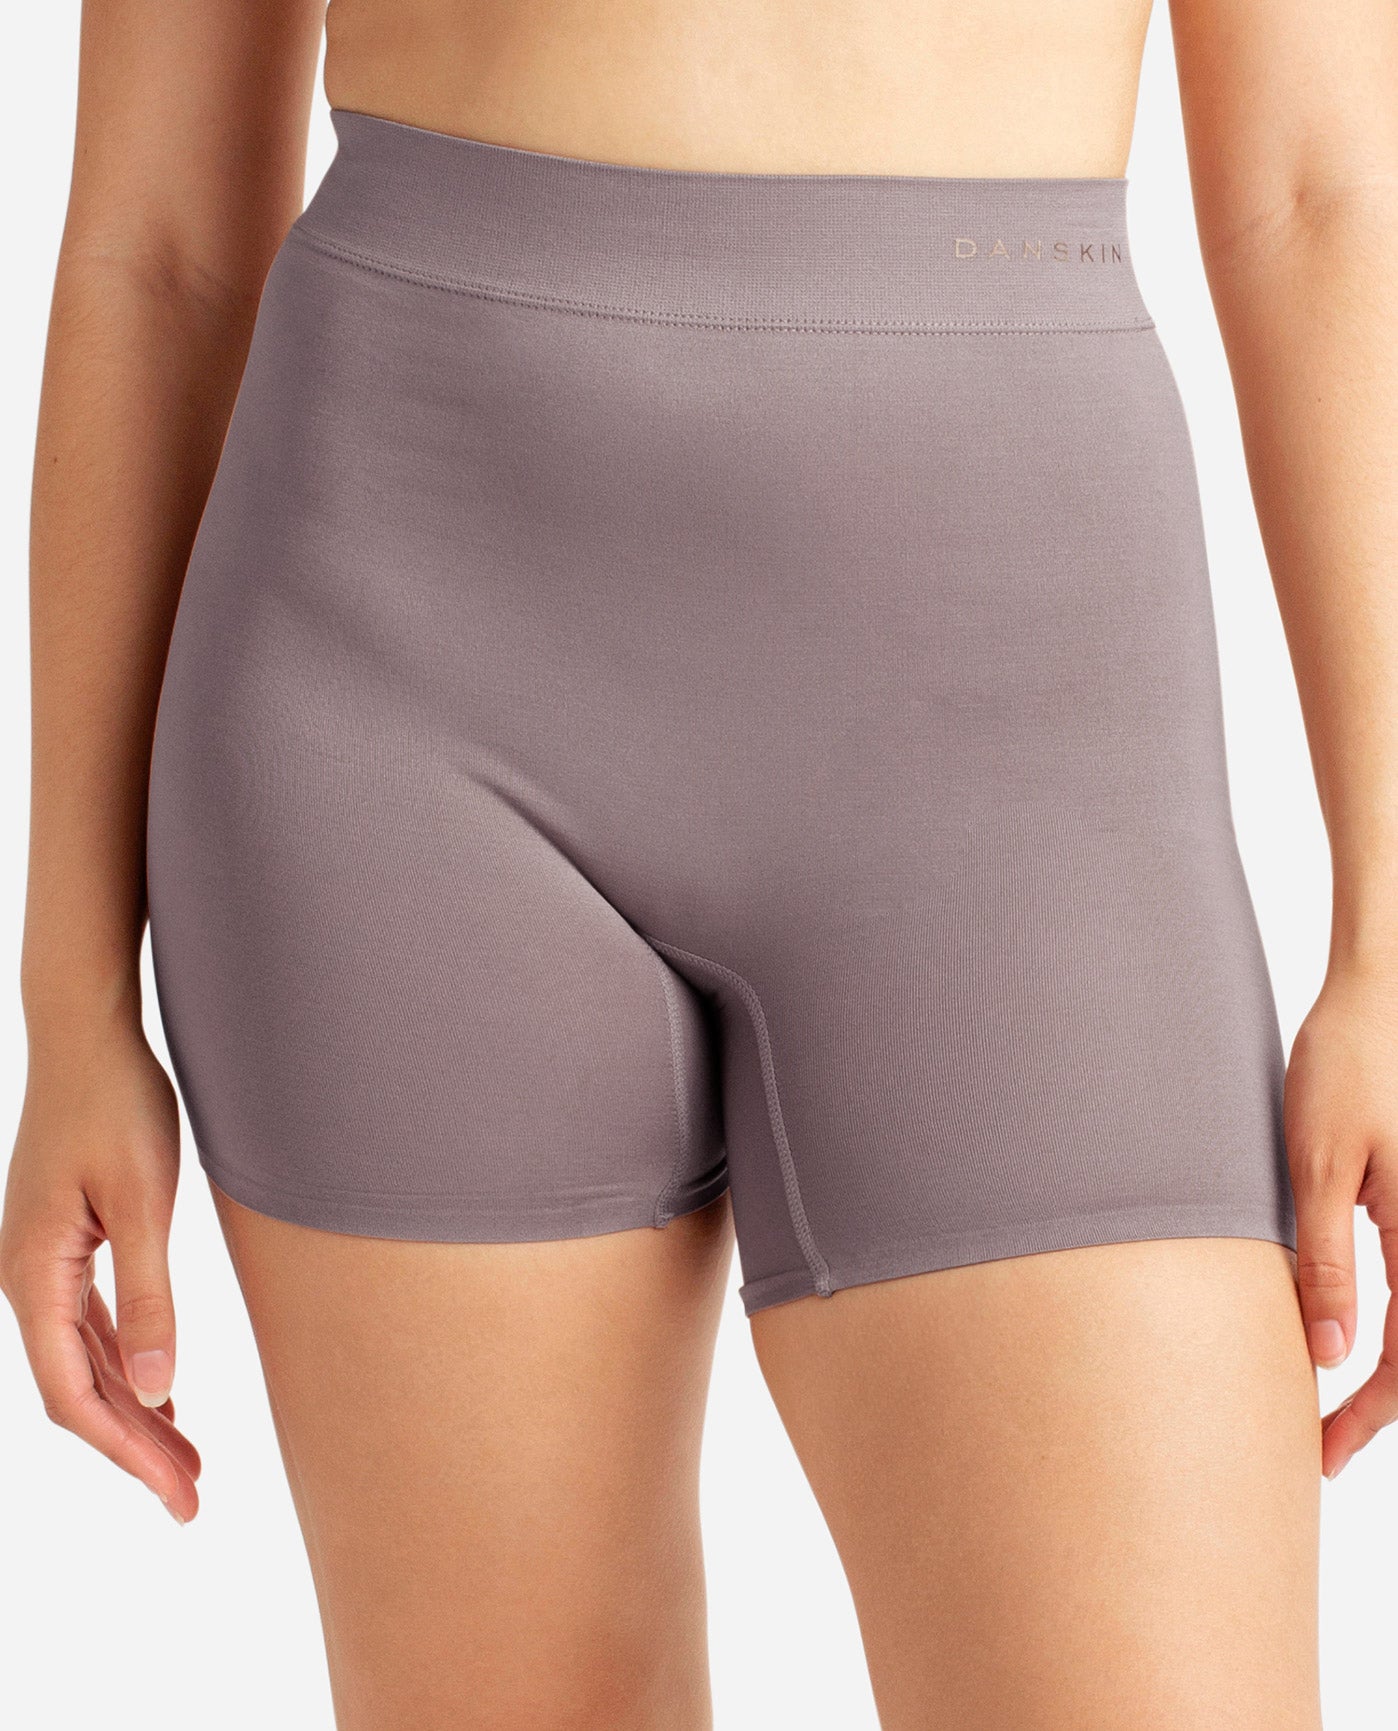 Women's Slip Shorts 3-Pack $16 at